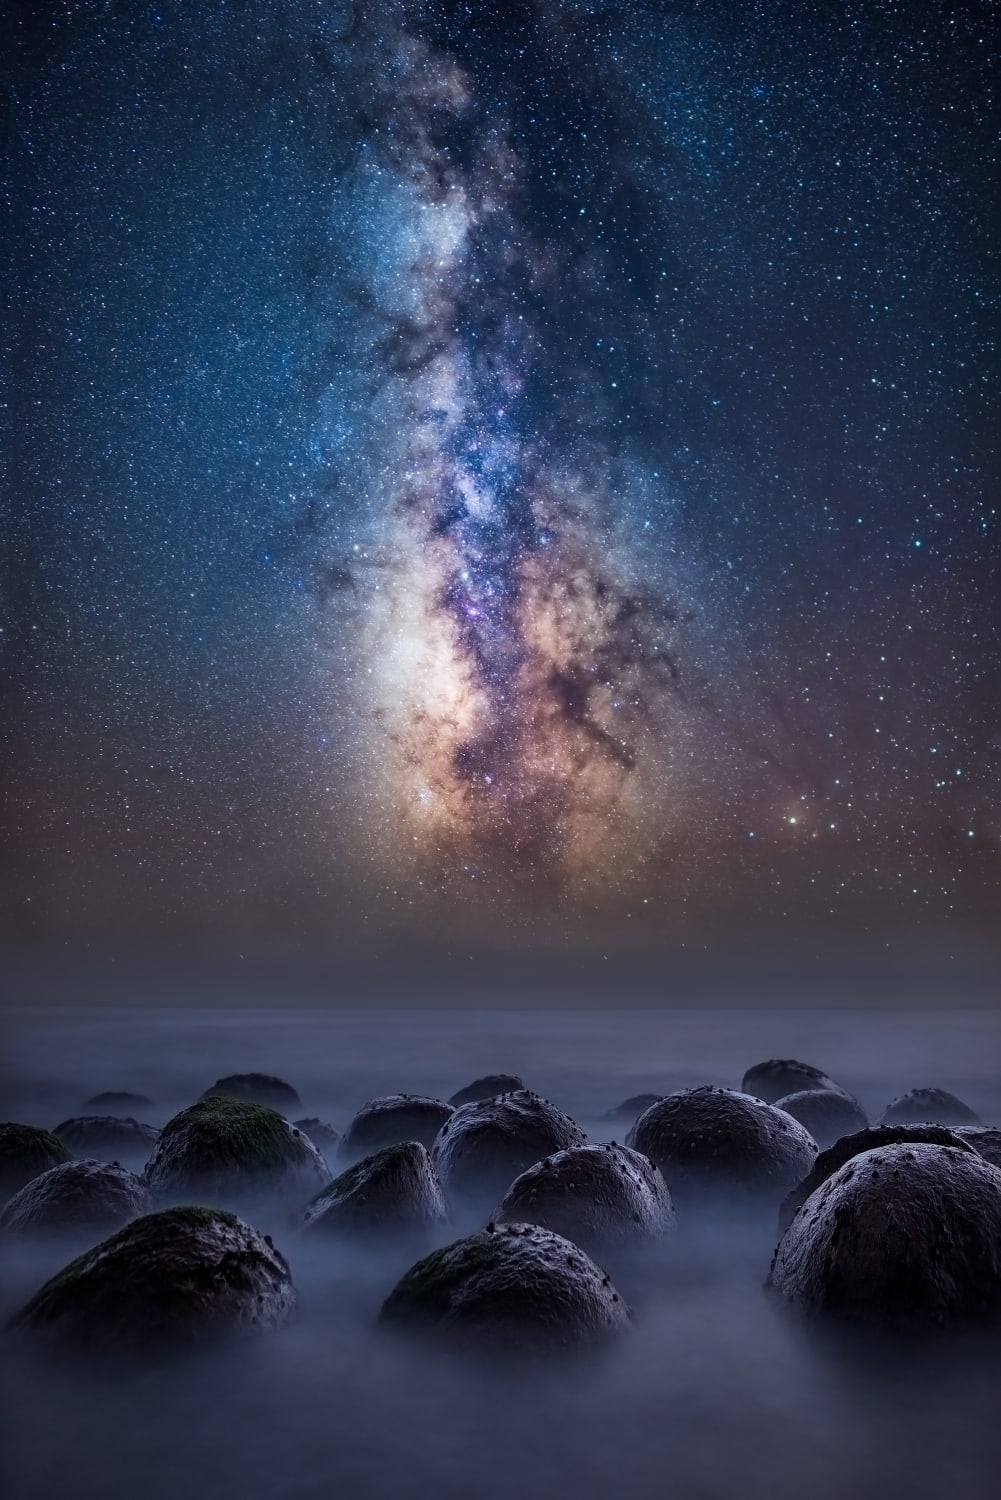 Milky Way rising over "alien eggs" in Northern California